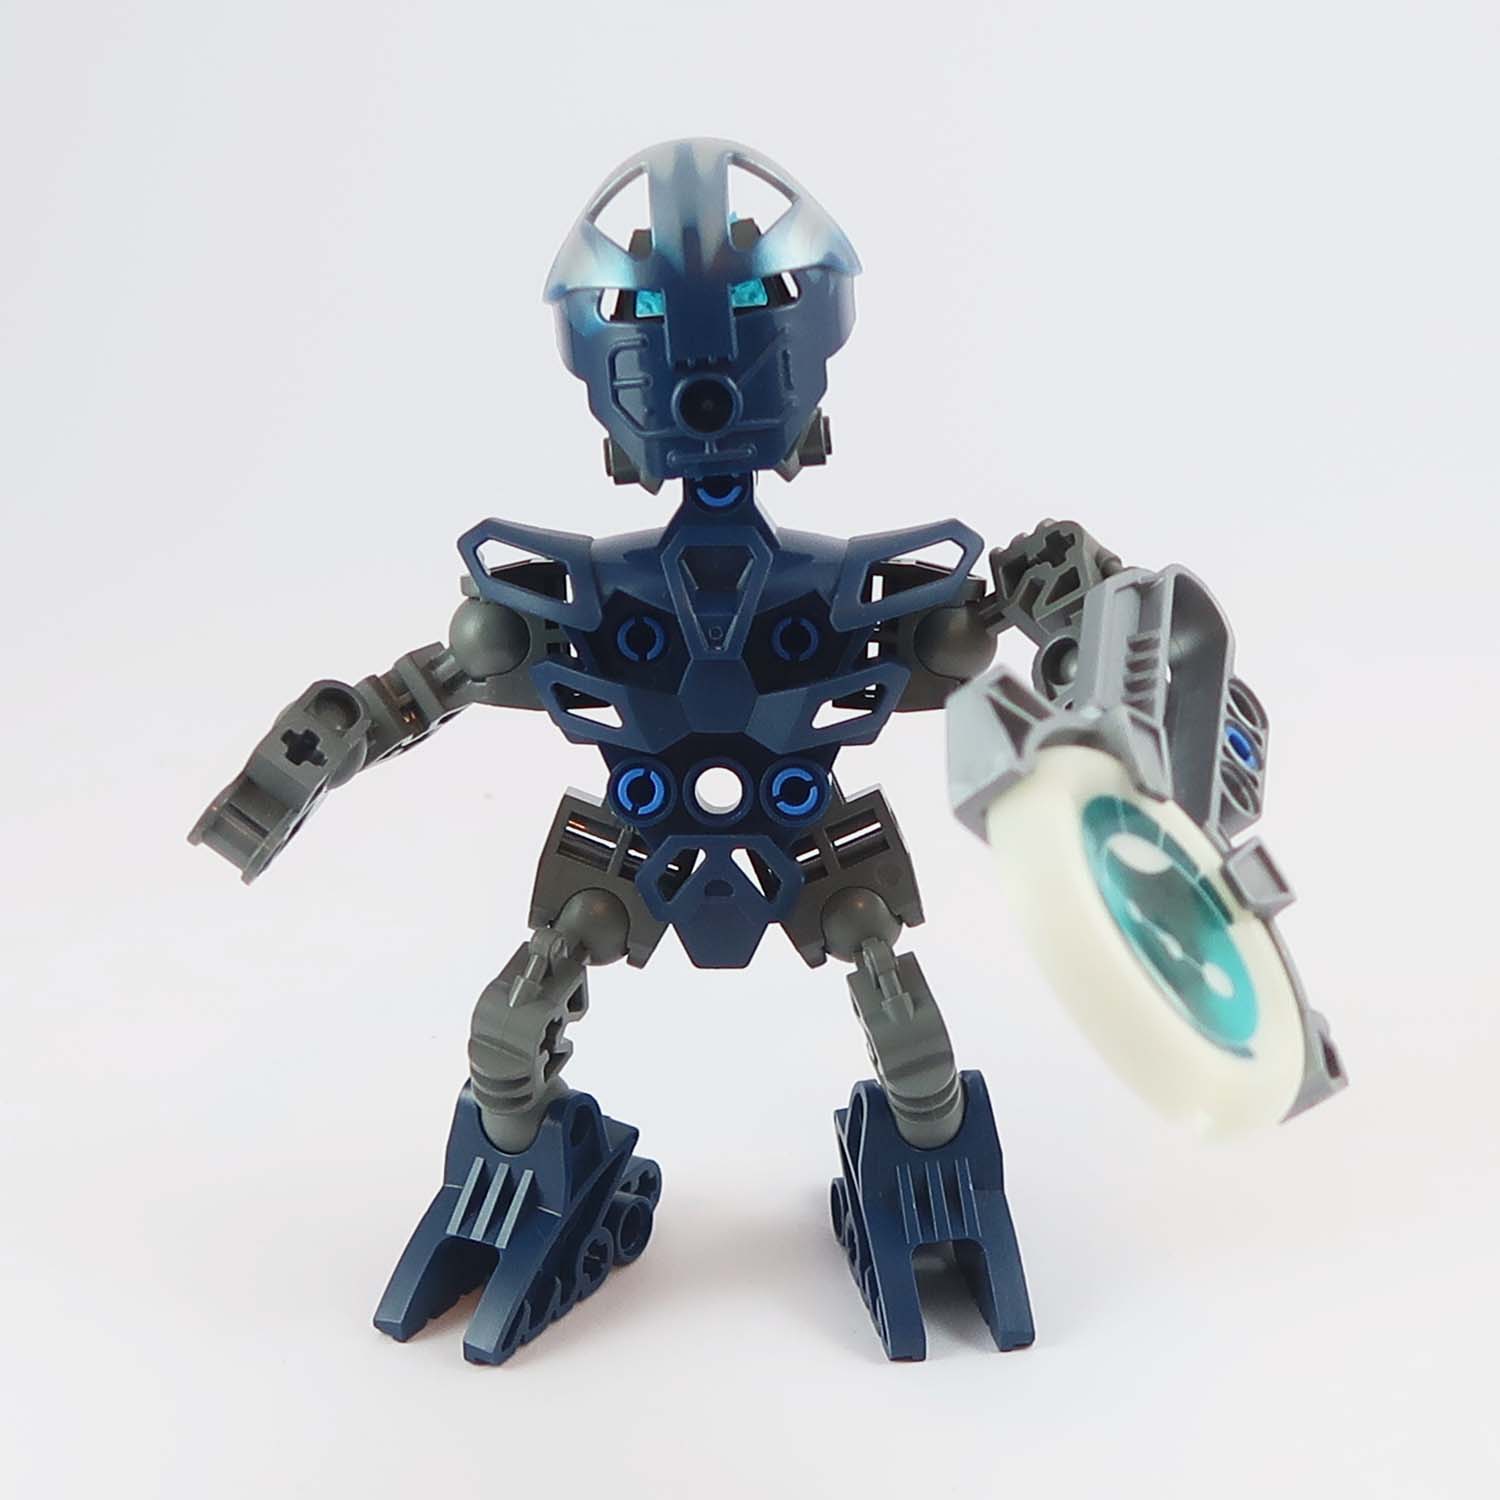 LEGO Bionicle - Matoran Vhisola (8608)